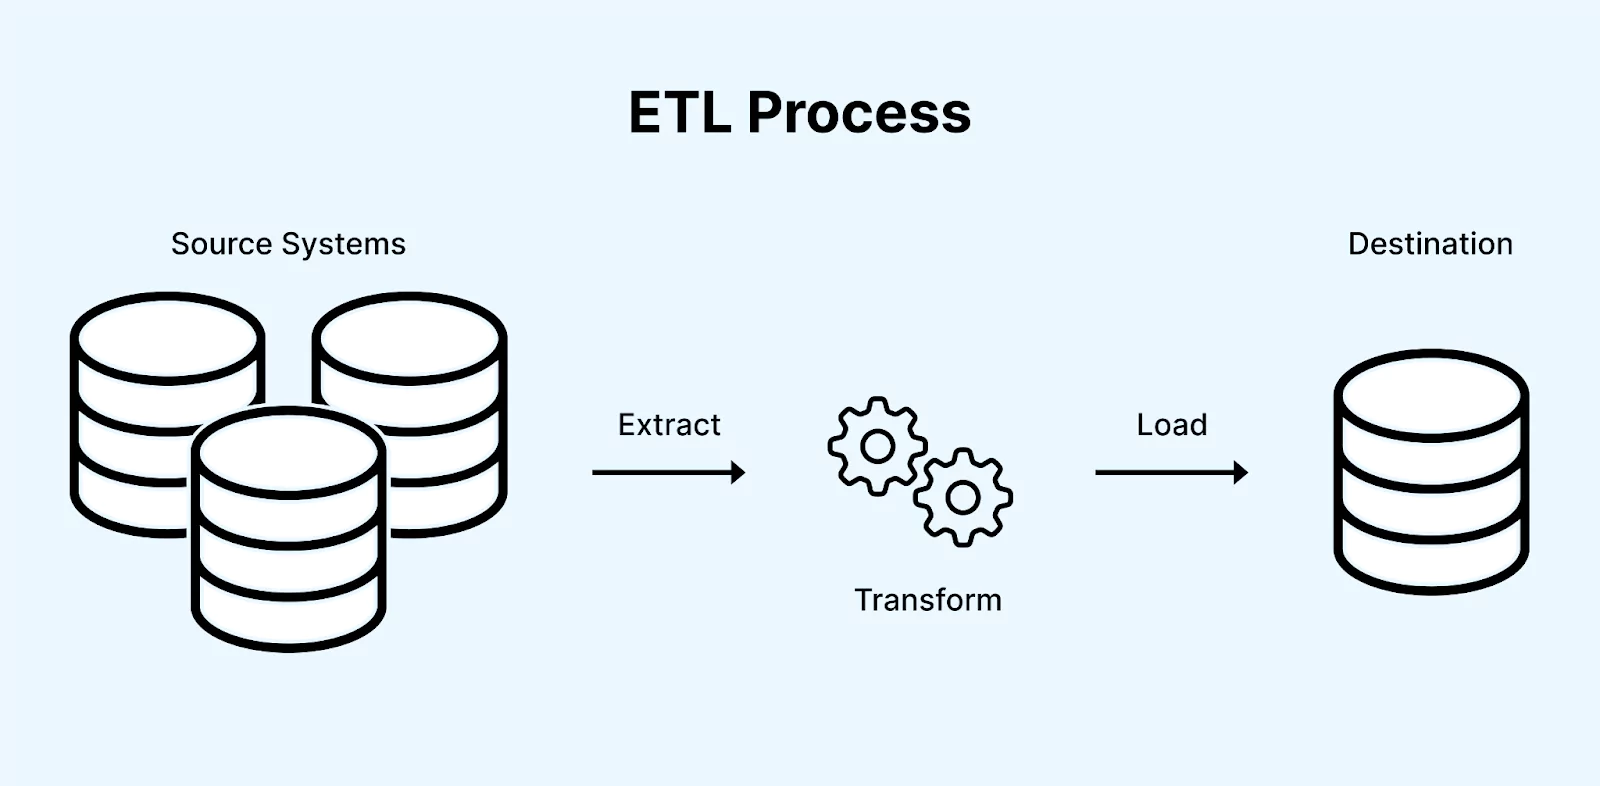 Extract, Transform, Load (ETL) process is a vital conduit